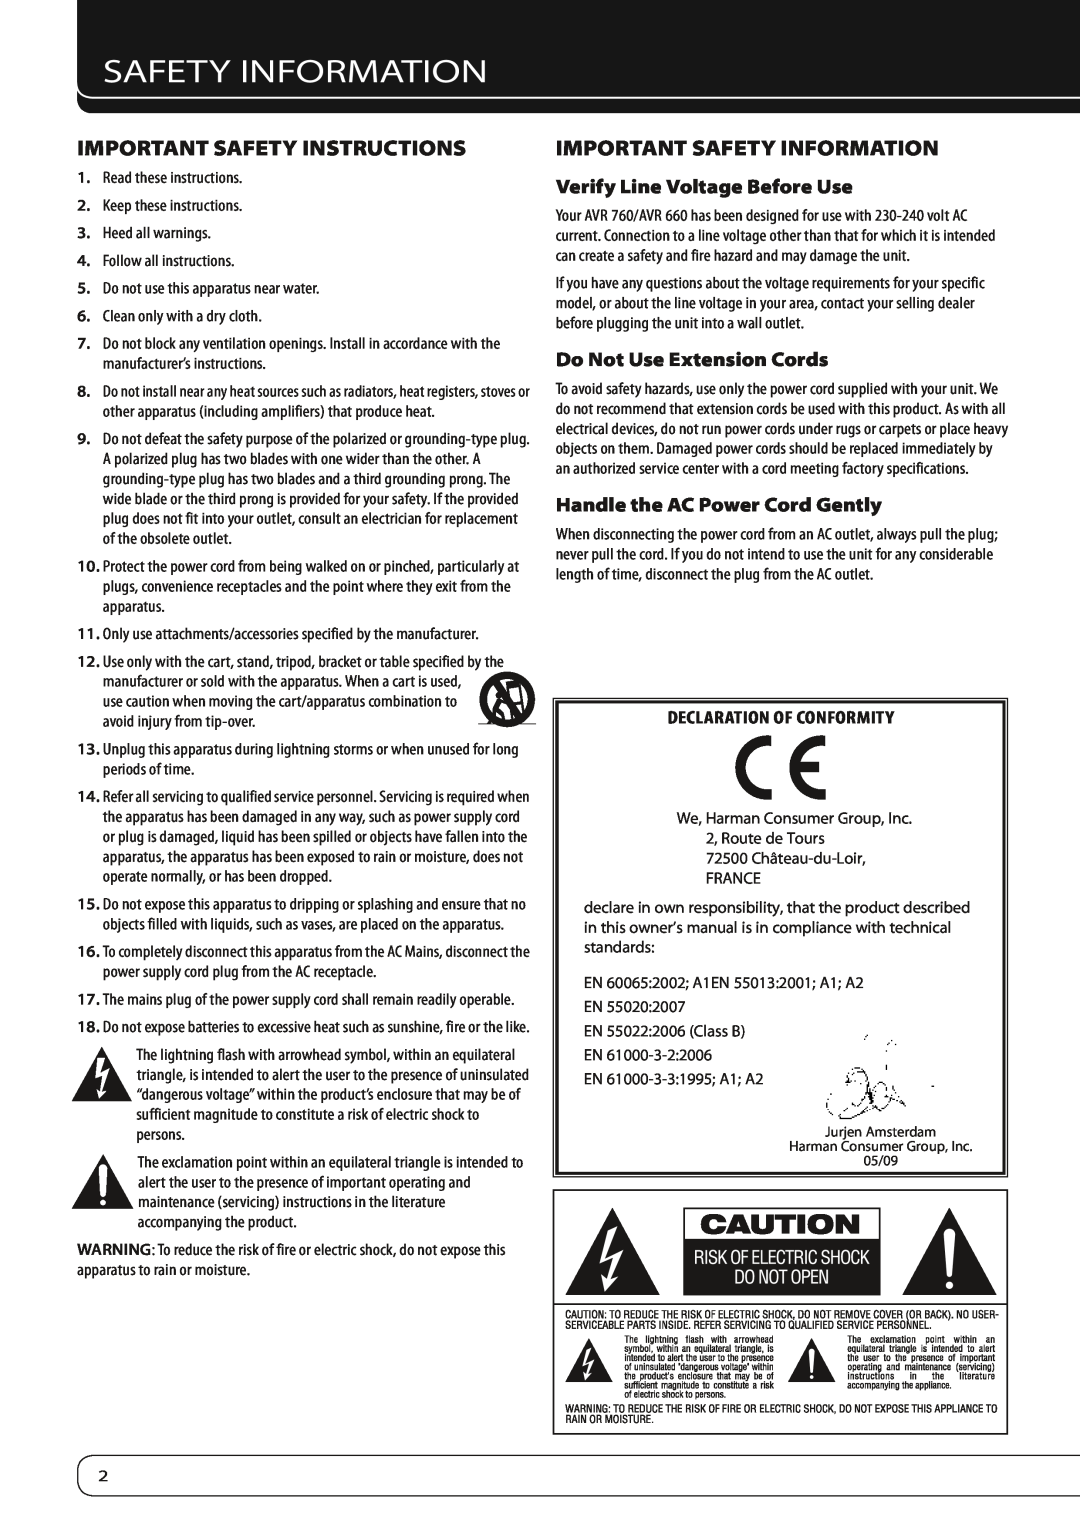 Harman-Kardon 760, 660 Important Safety Instructions, Important Safety Information, Verify Line Voltage Before Use 